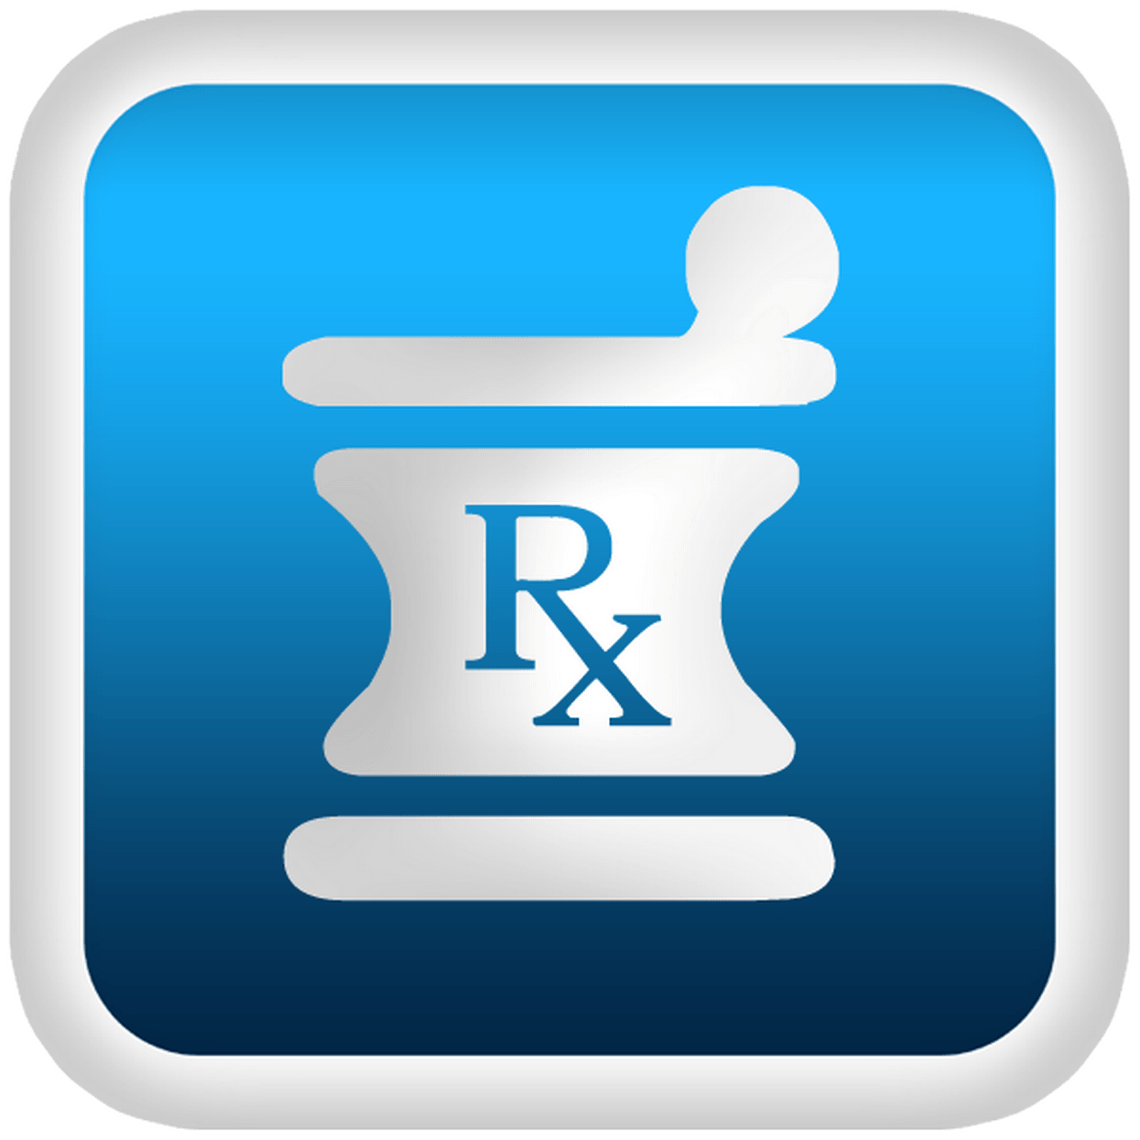 RX Symbol Logo - How Rx symbol came to mean prescription drugs | Belleville News-Democrat